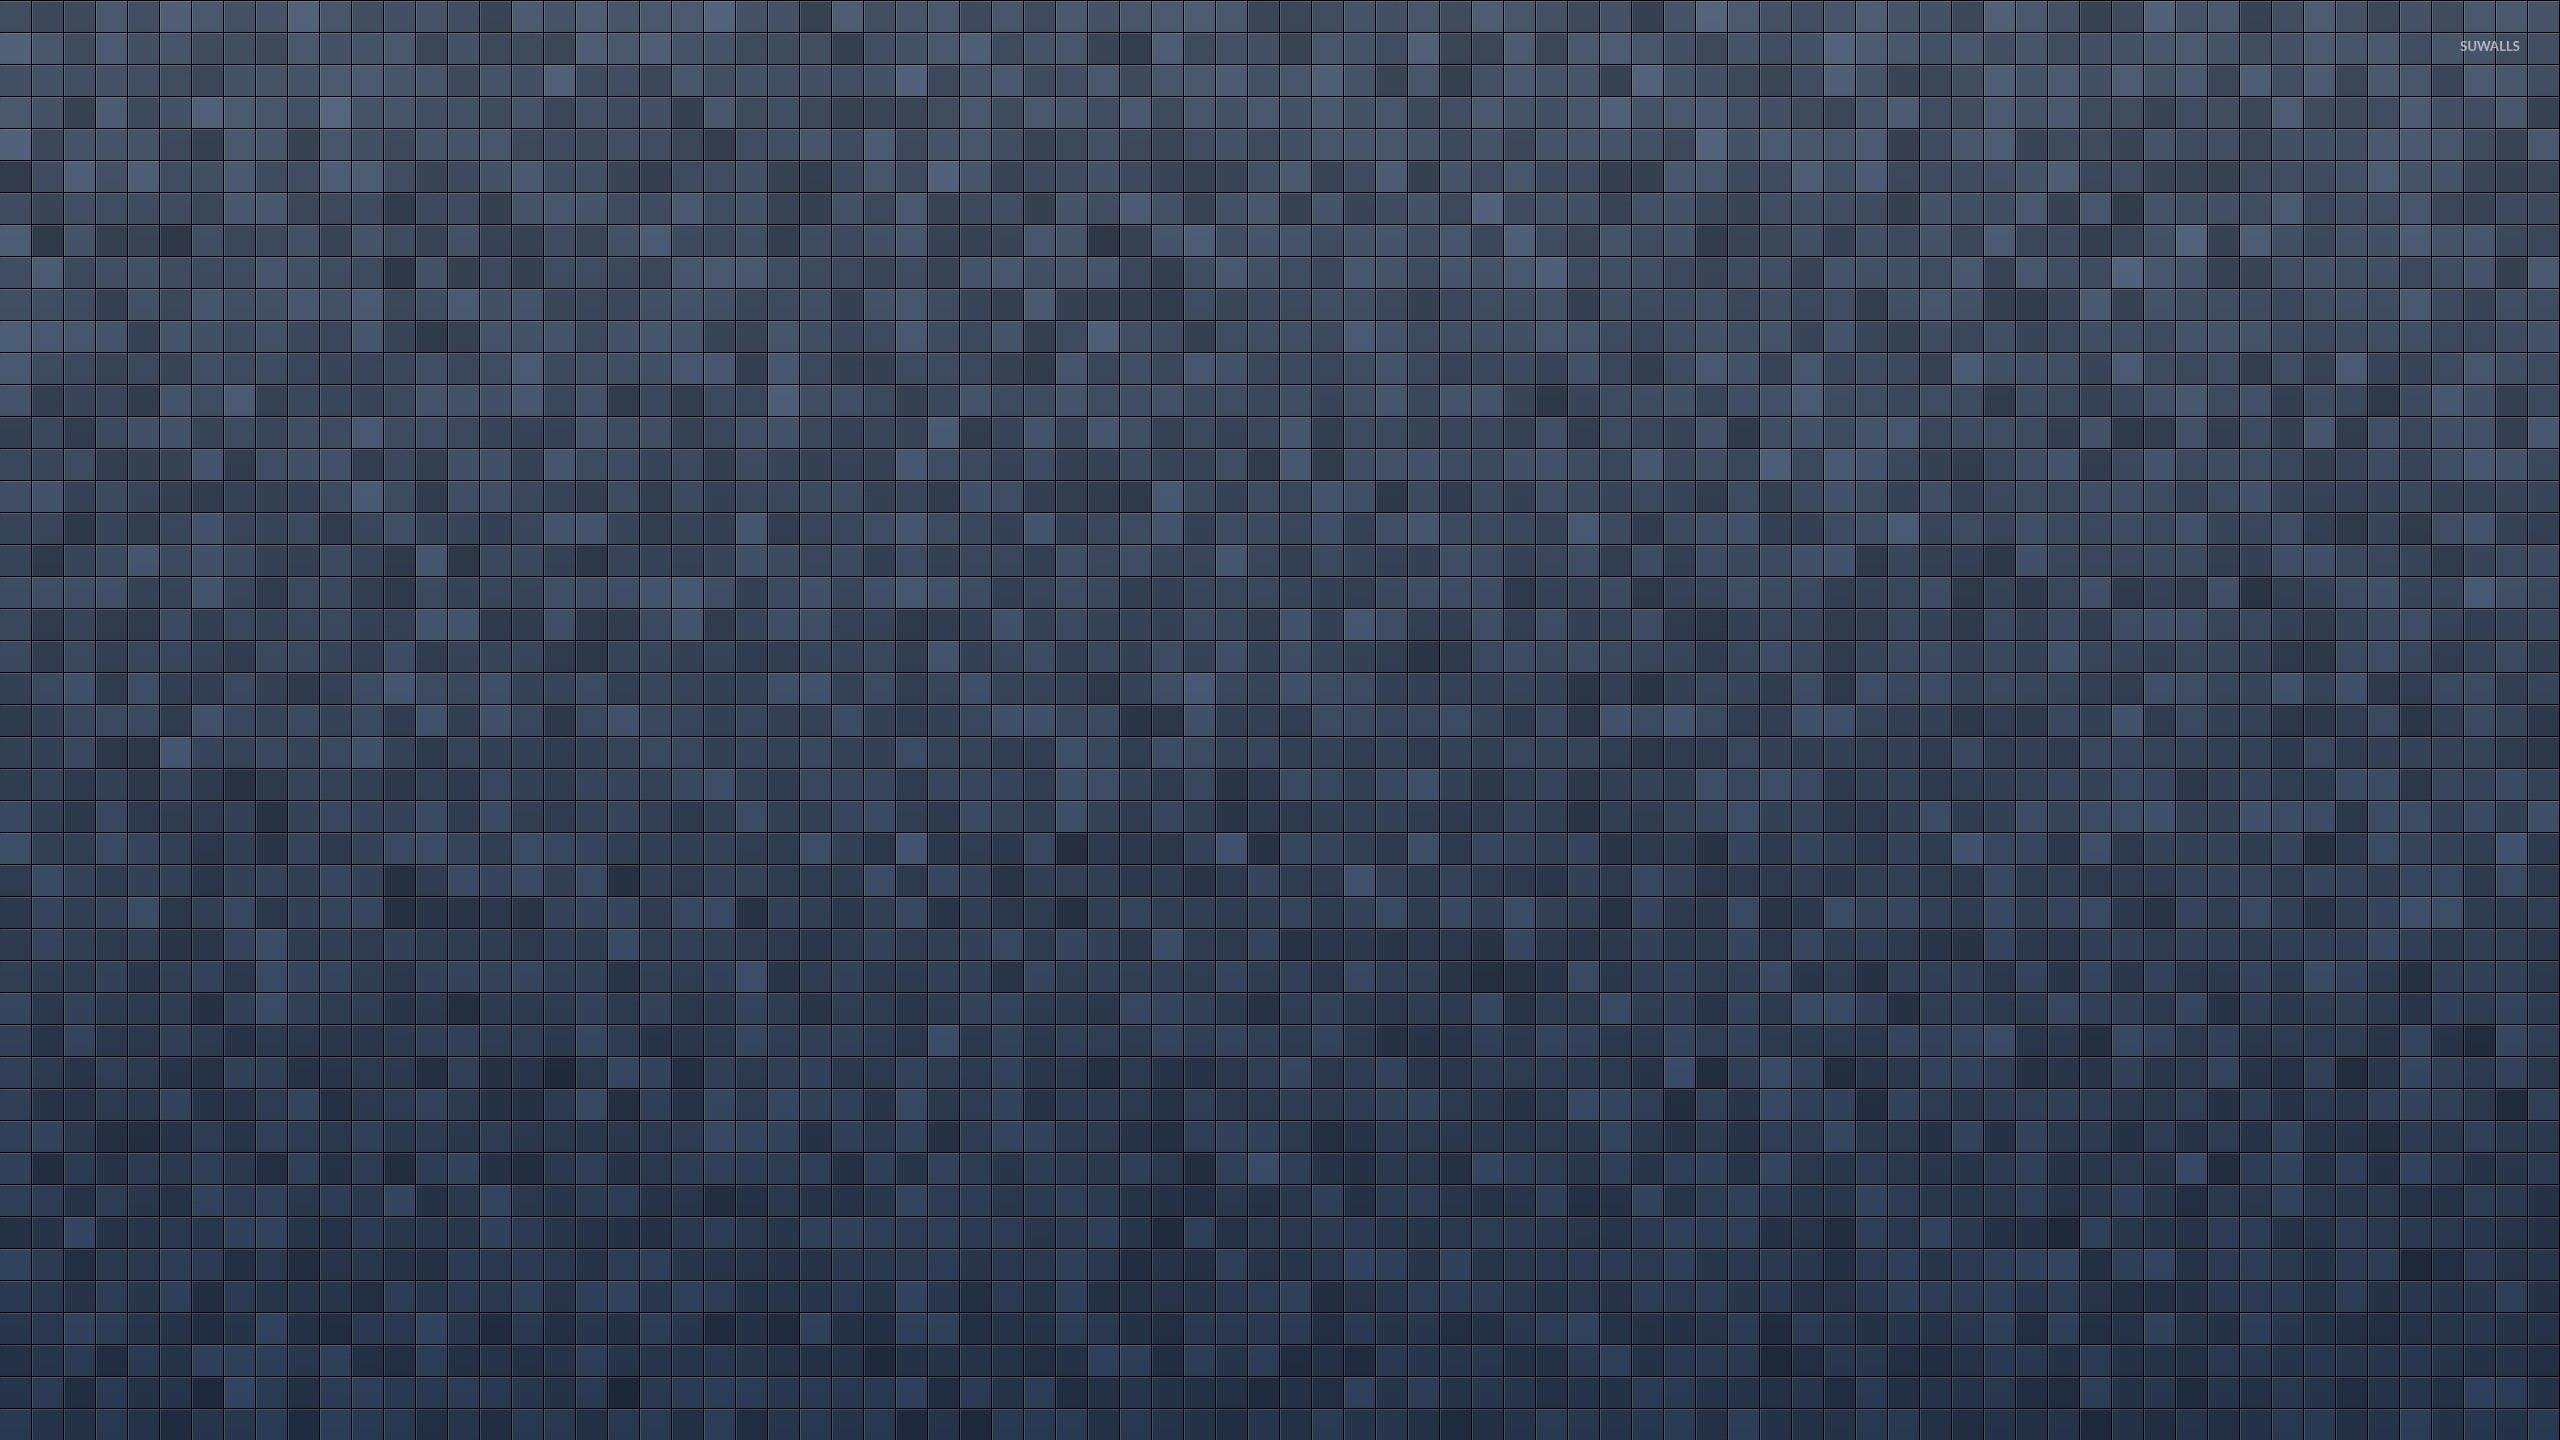 Blue Squares Wallpaper Abstract Wallpapers 45486 HD Wallpapers Download Free Images Wallpaper [wallpaper981.blogspot.com]